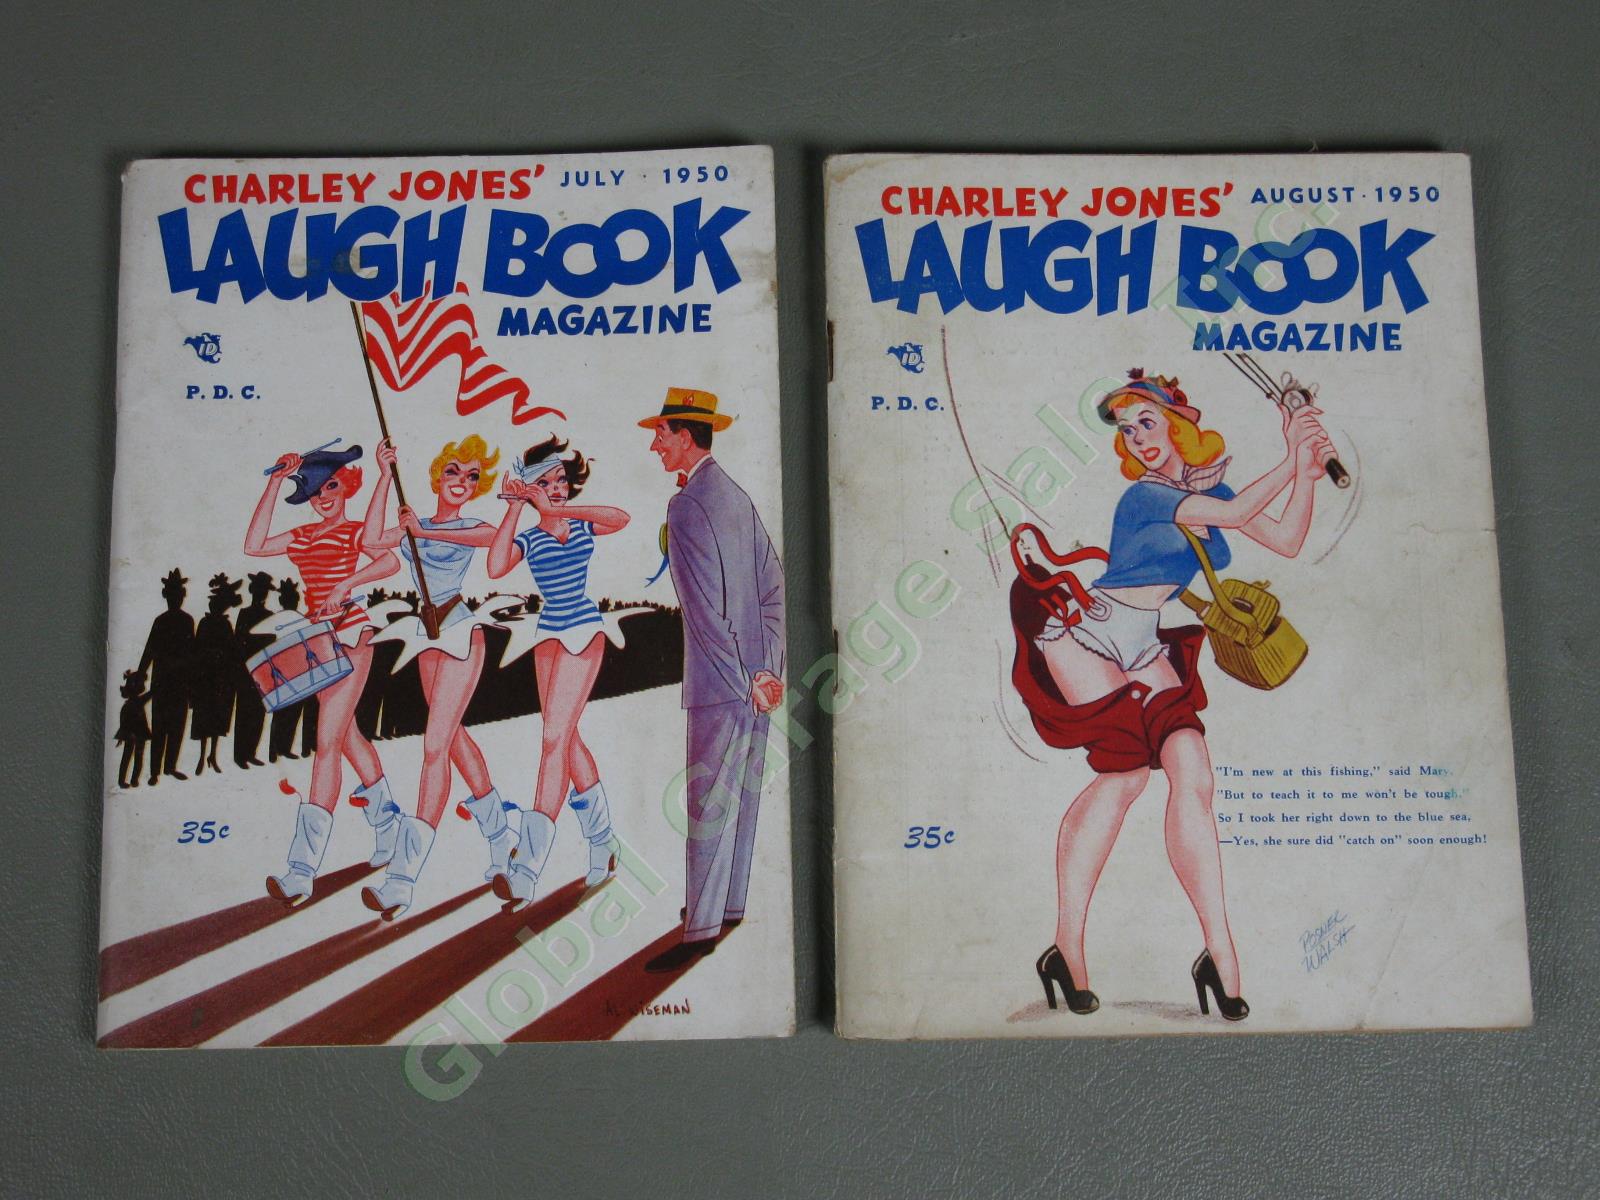 22 Vintage 1947-1950 Charley Jones Laugh Book Magazines Lot Risque Adult Humor 9